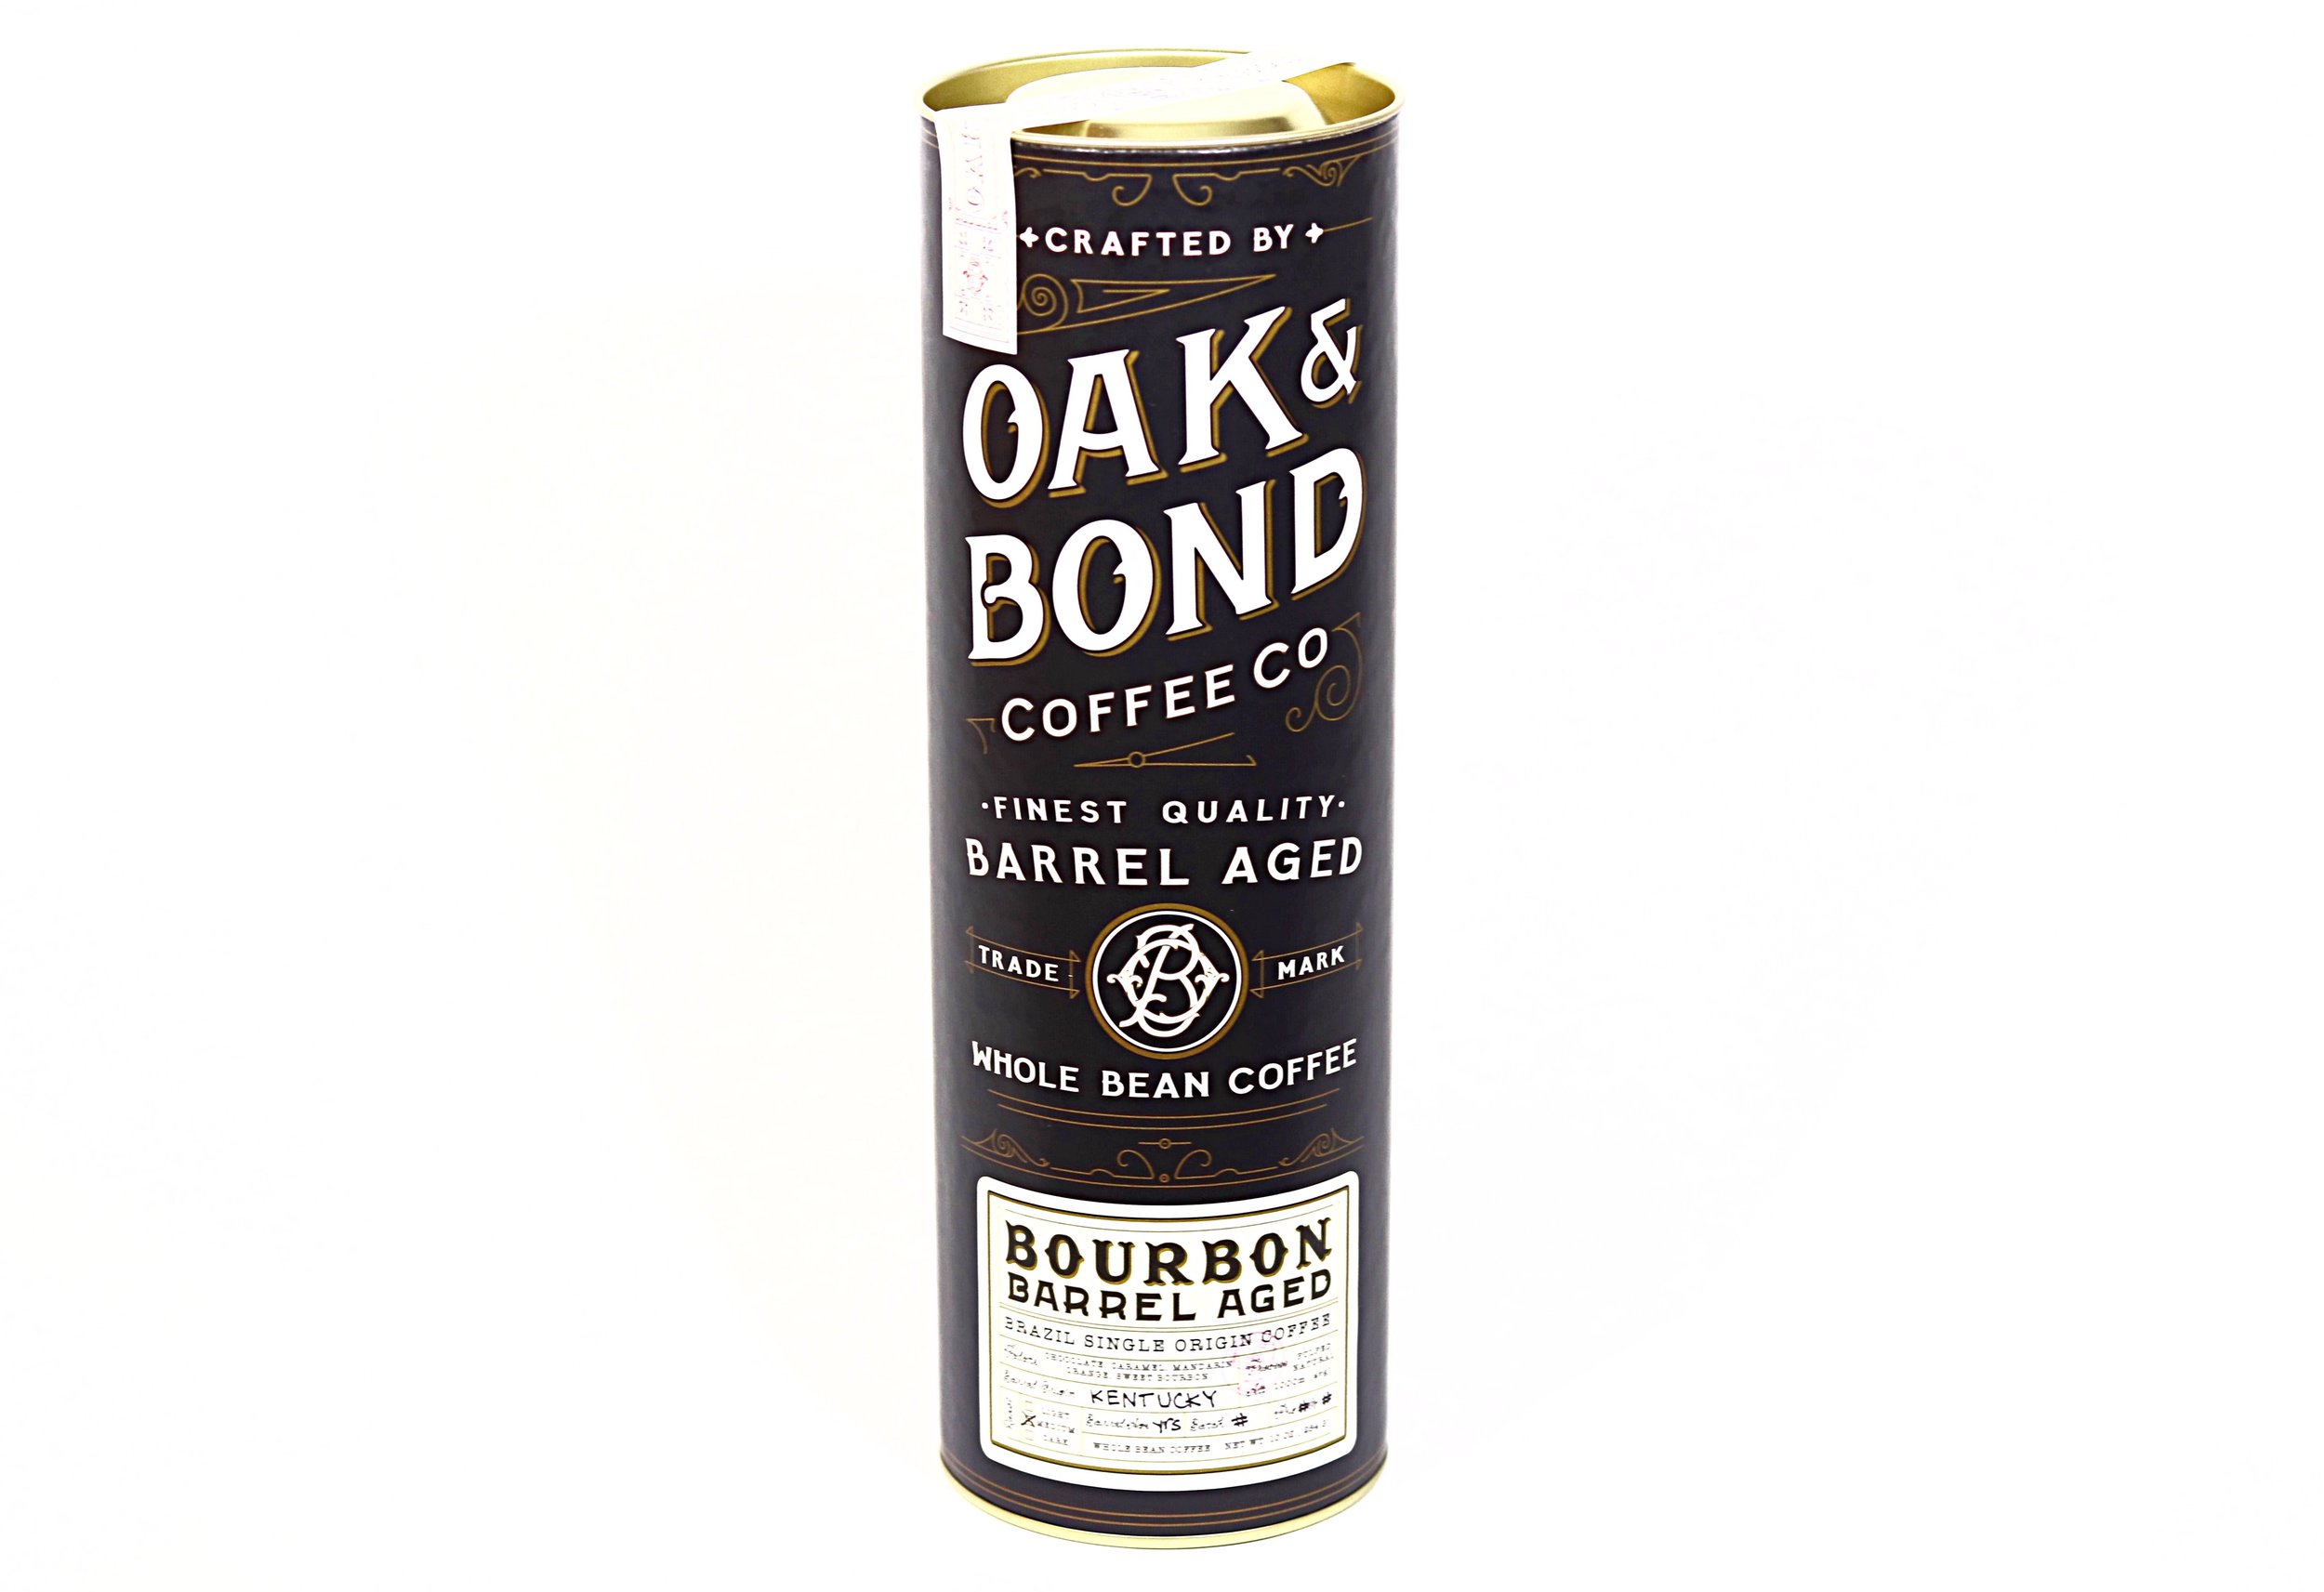 Oak-and-bond-barrel-aged-coffee-5